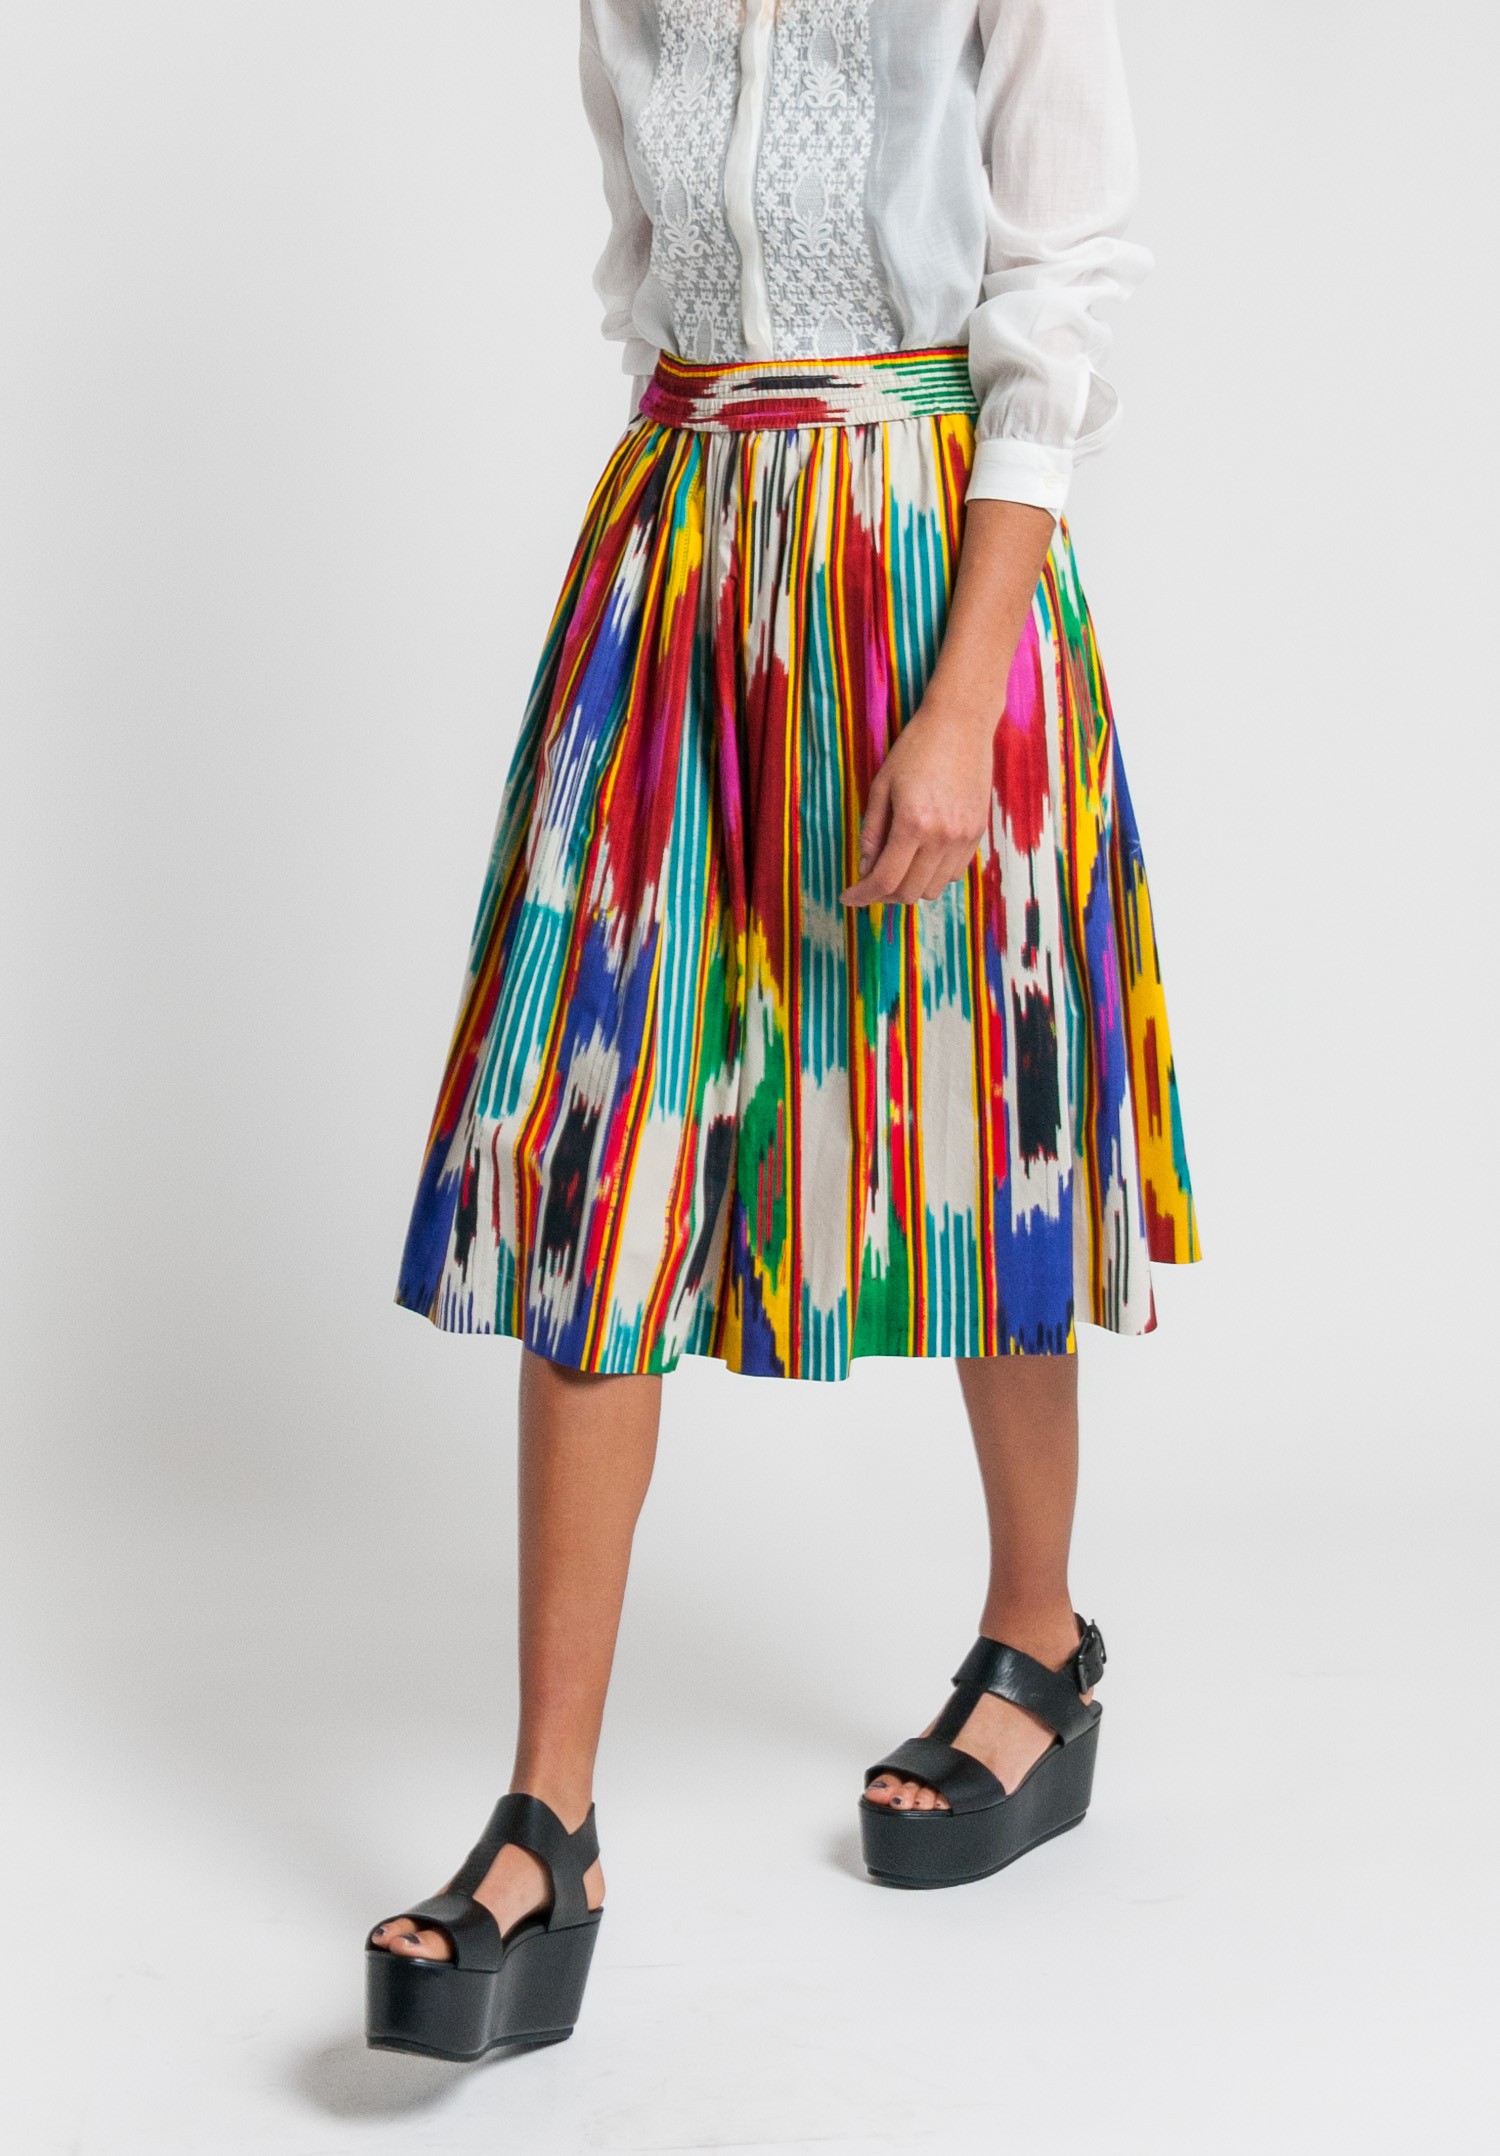 Etro Cotton Ikat Printed Skirt in Multi Color | Santa Fe Dry Goods ...